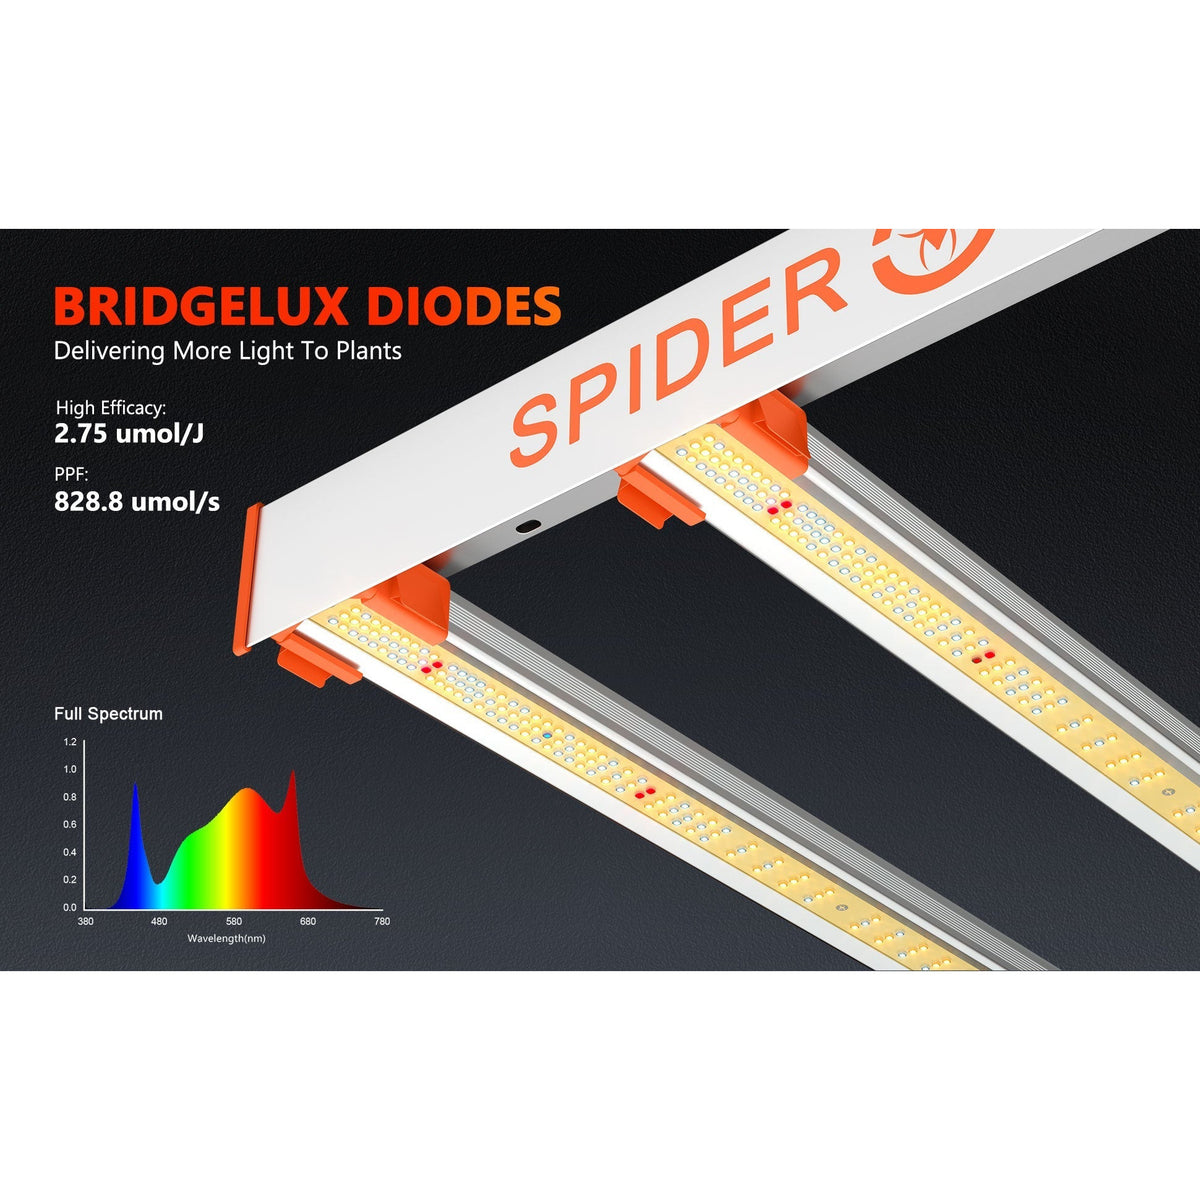 Trimleaf Spider Farmer G3000 Cost-effective Full Spectrum LED Grow Light